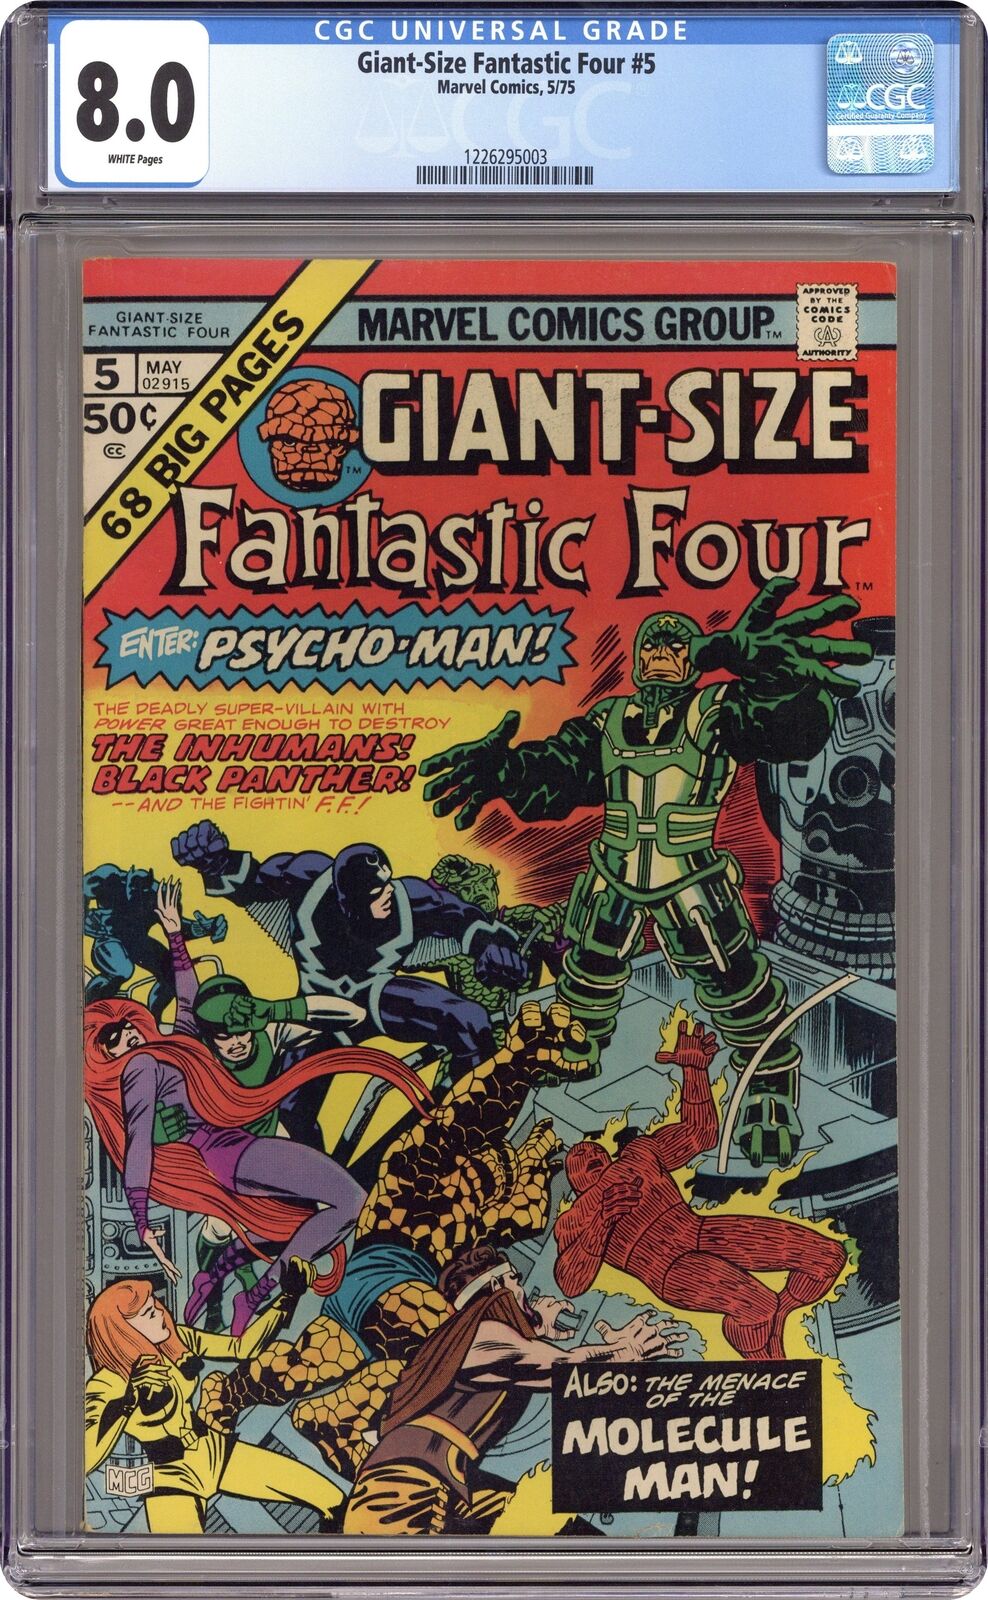 Giant Size Fantastic Four #5 CGC 8.0 1975 1226295003